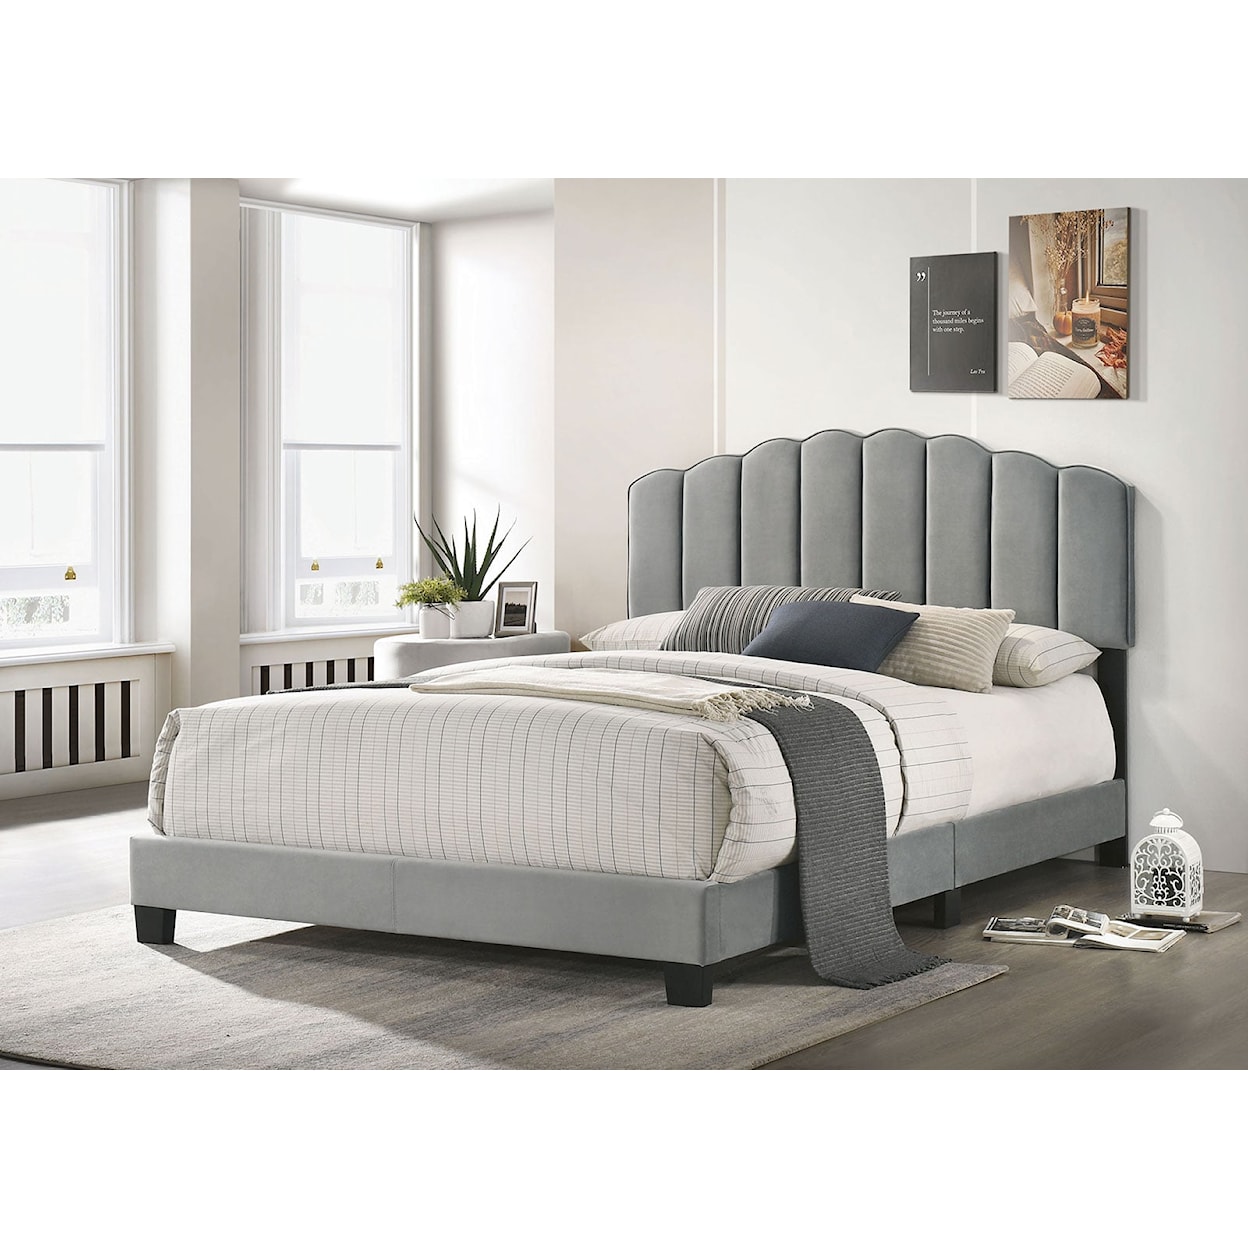 Furniture of America Nerina Full Bed